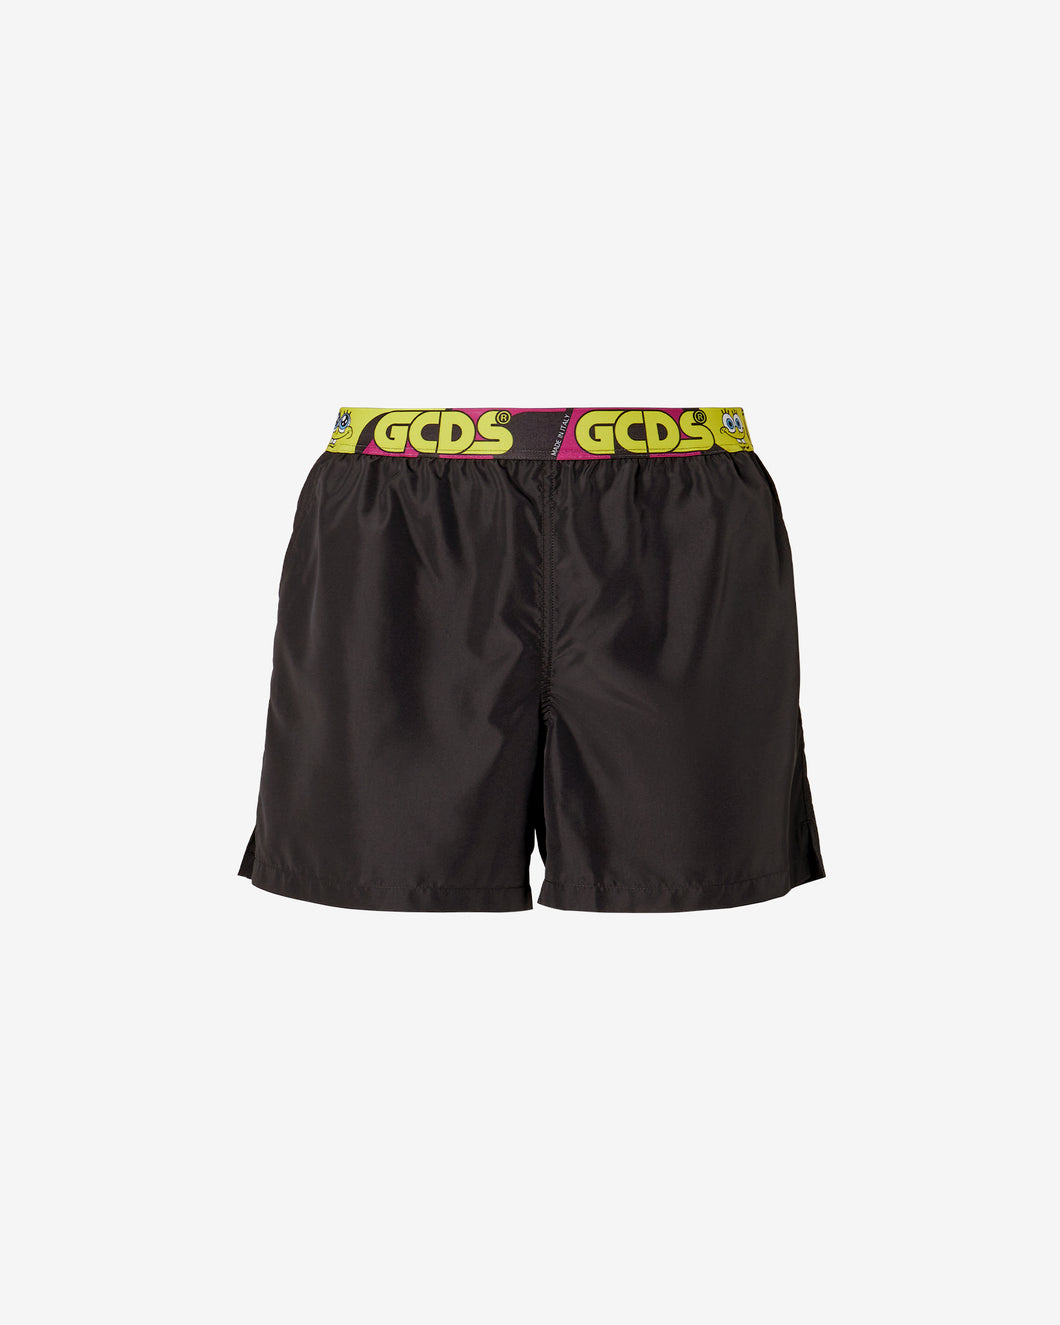 Spongebob Logo Swim Shorts : Men Swimwear Black | GCDS